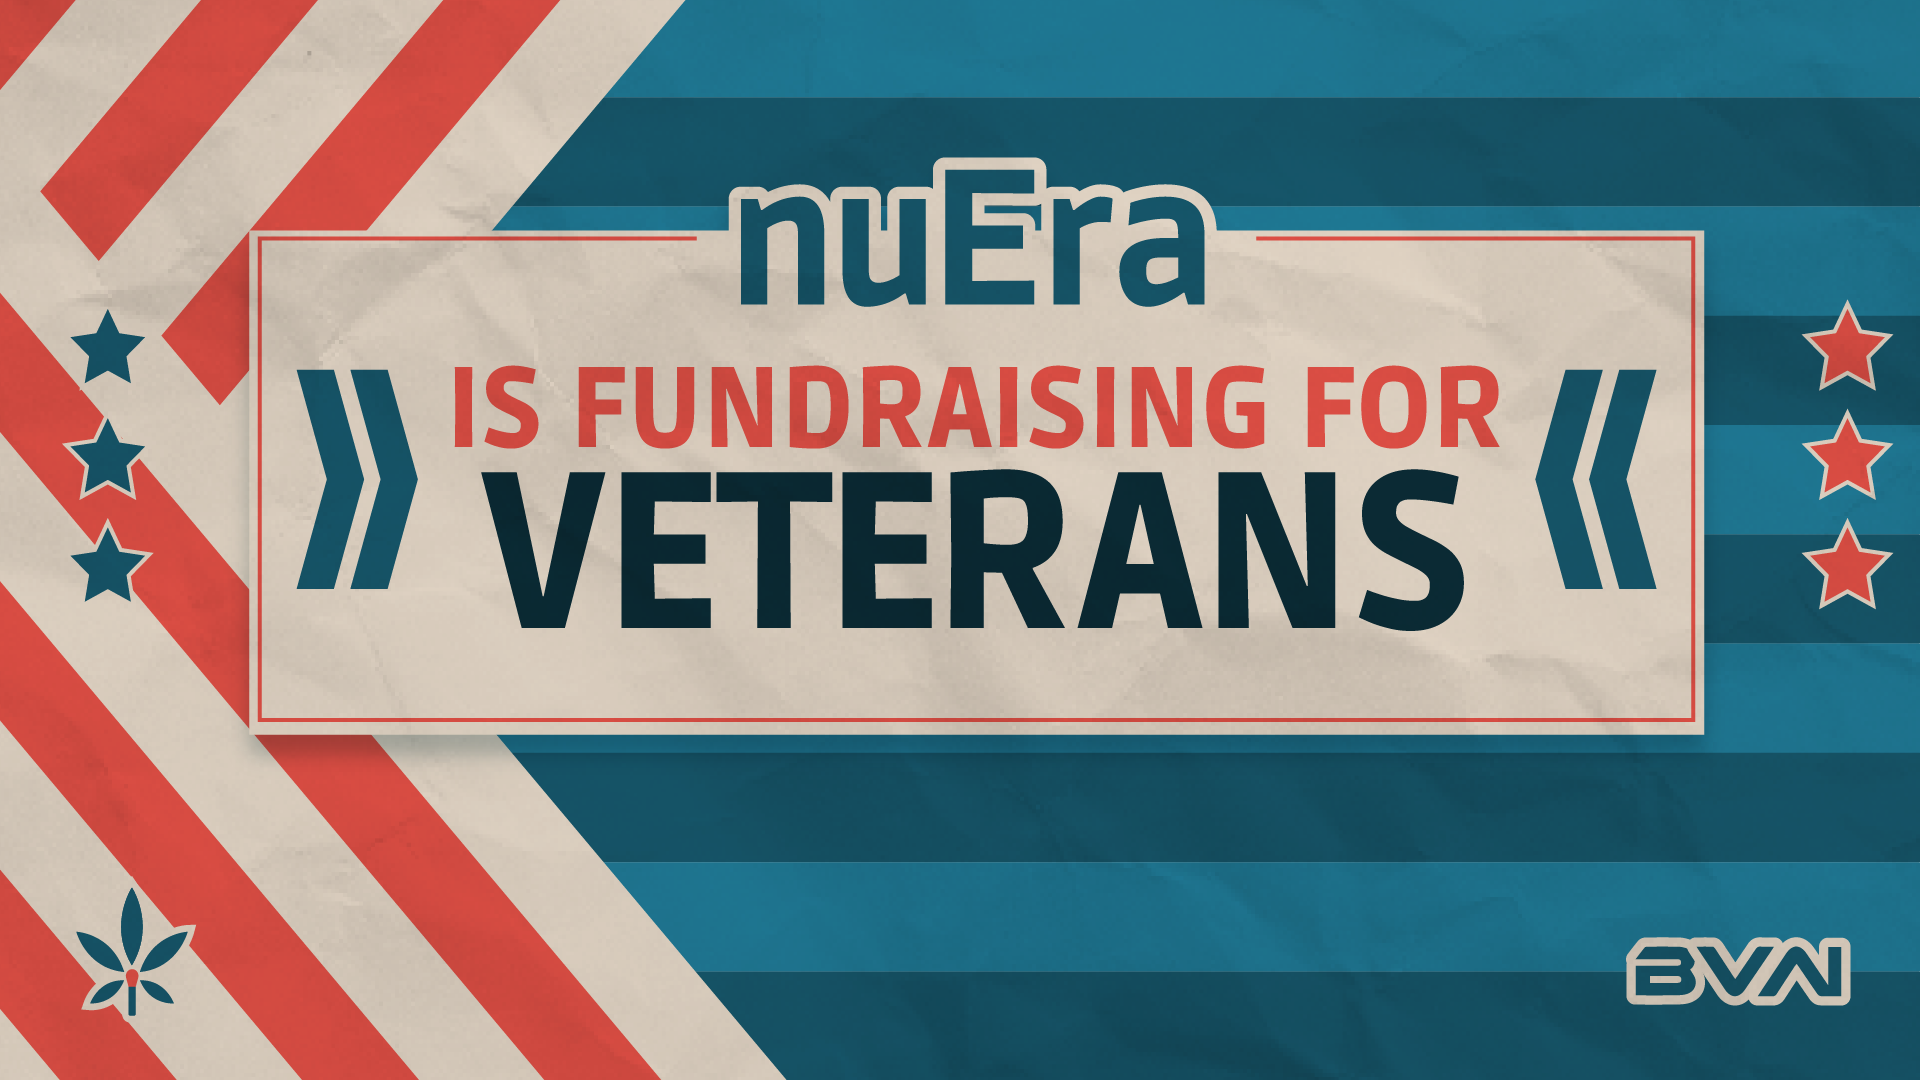 nuEra fundraiser for Balanced Veterans Network